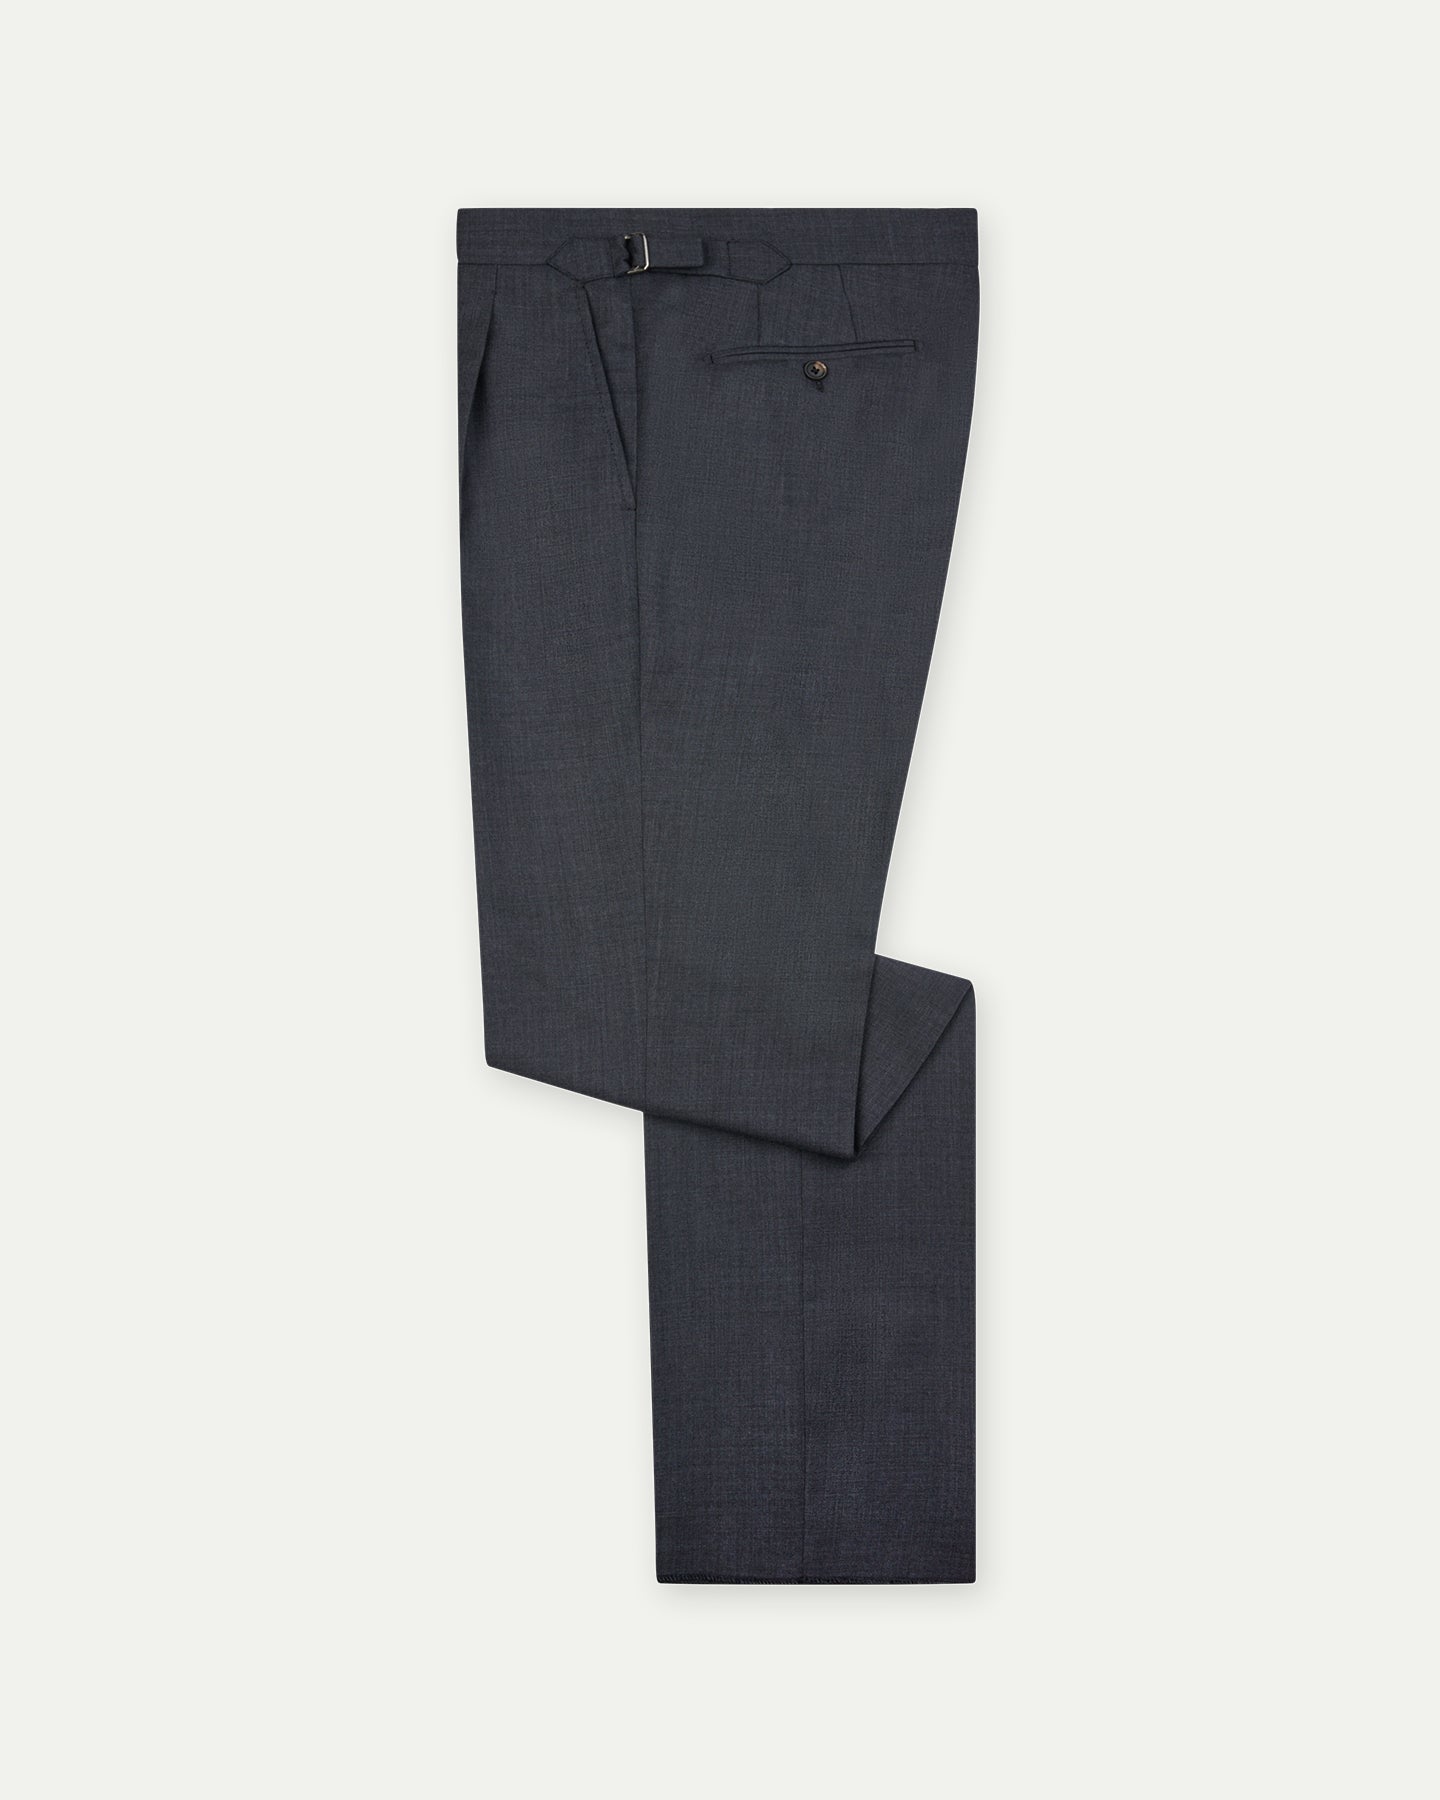 ORIGINAL PENGUIN Dark Grey Sharkskin Wool Blend Pants Mens Size 34x30  Trousers | eBay